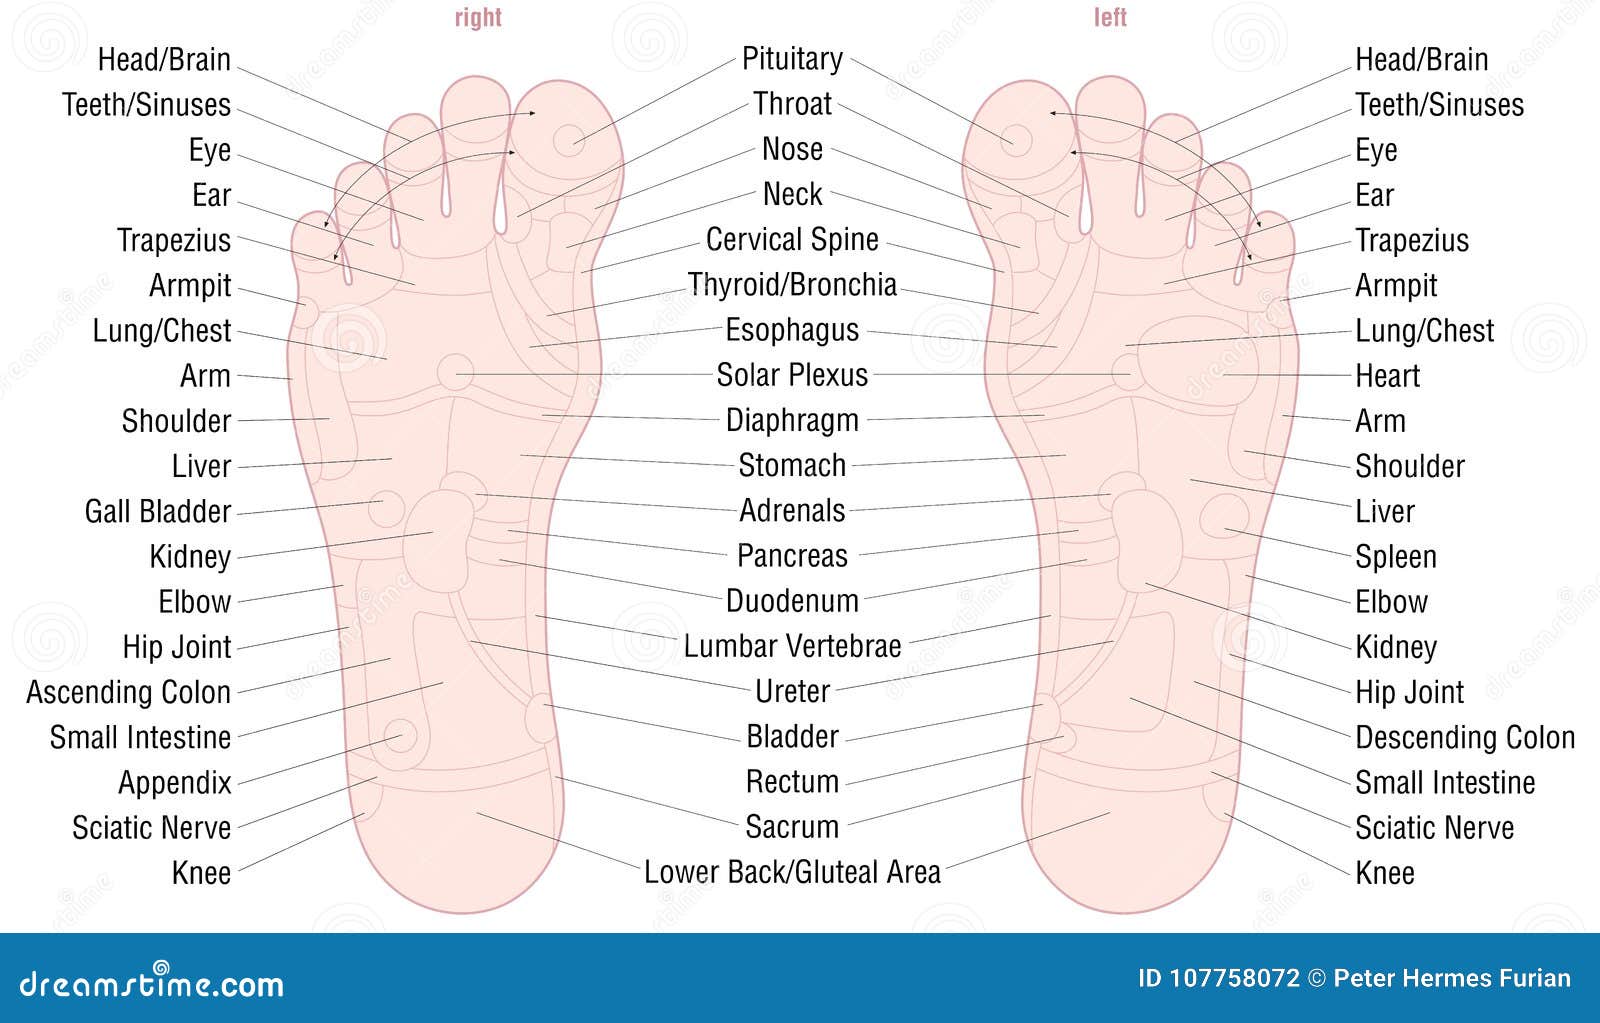 foot reflexology zone massage areas names